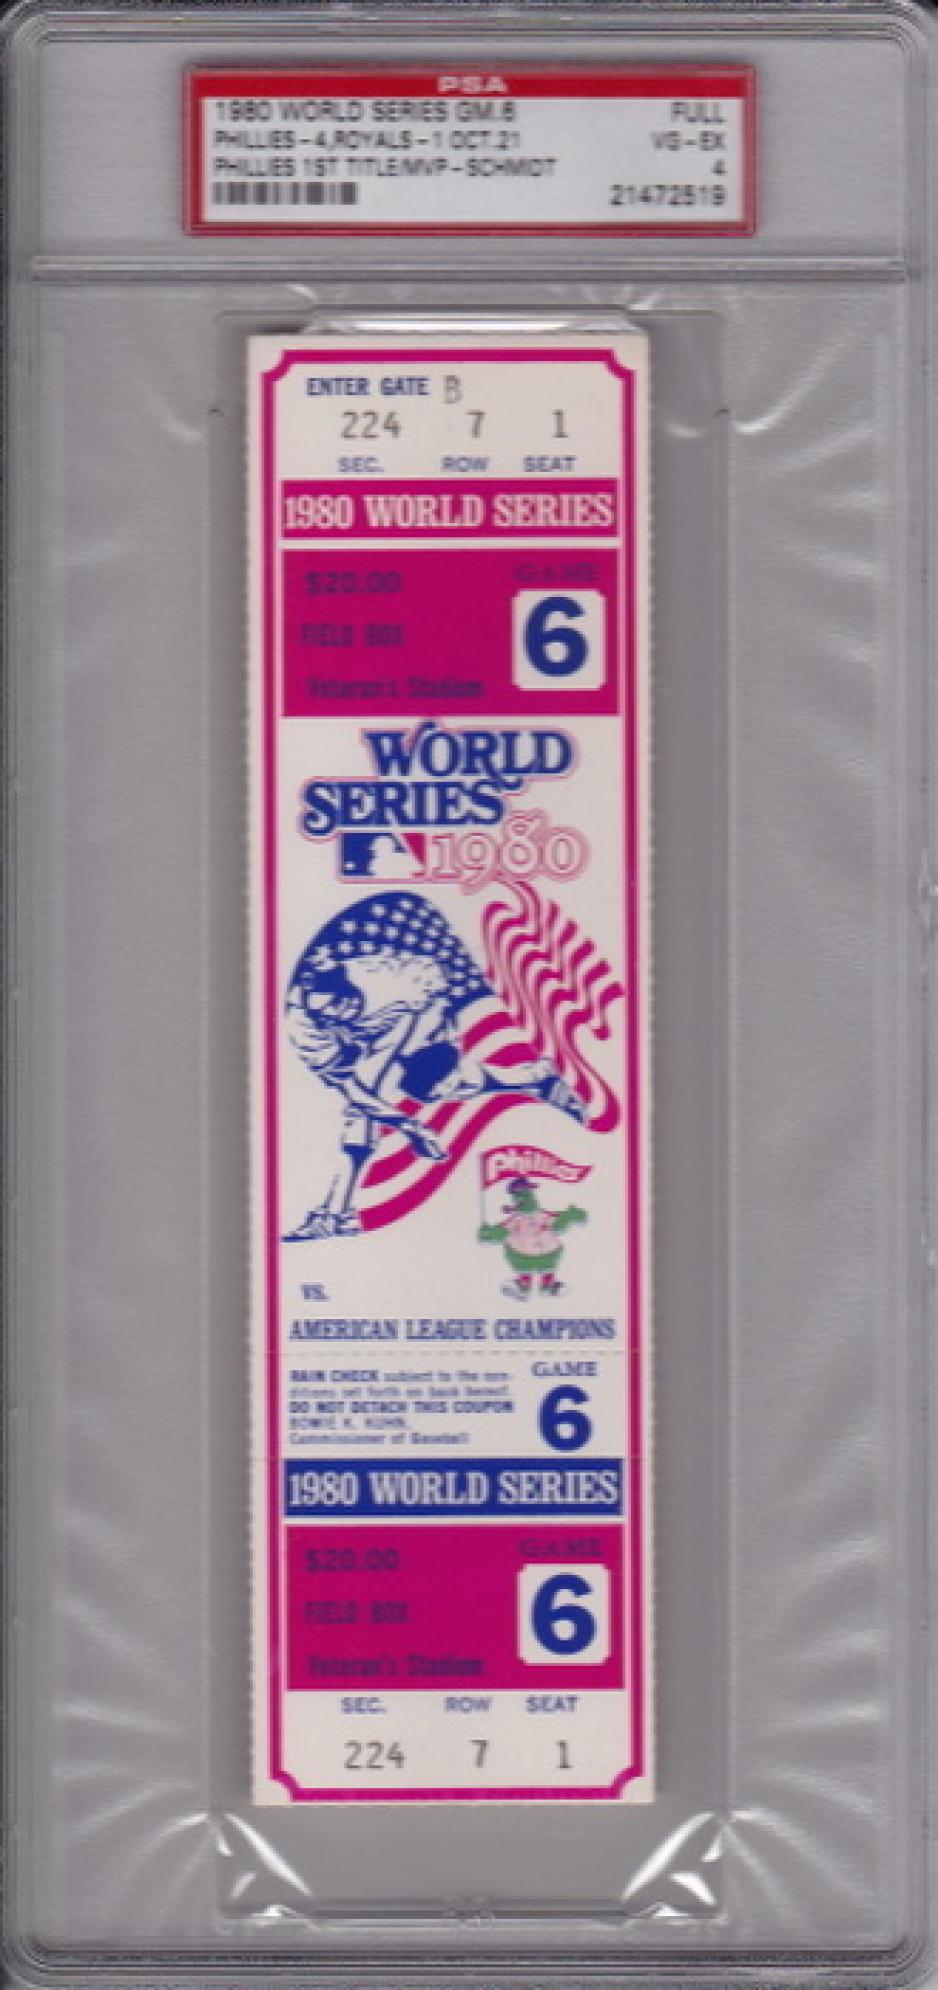 1980 World Series, Game 6: Royals @ Phillies 